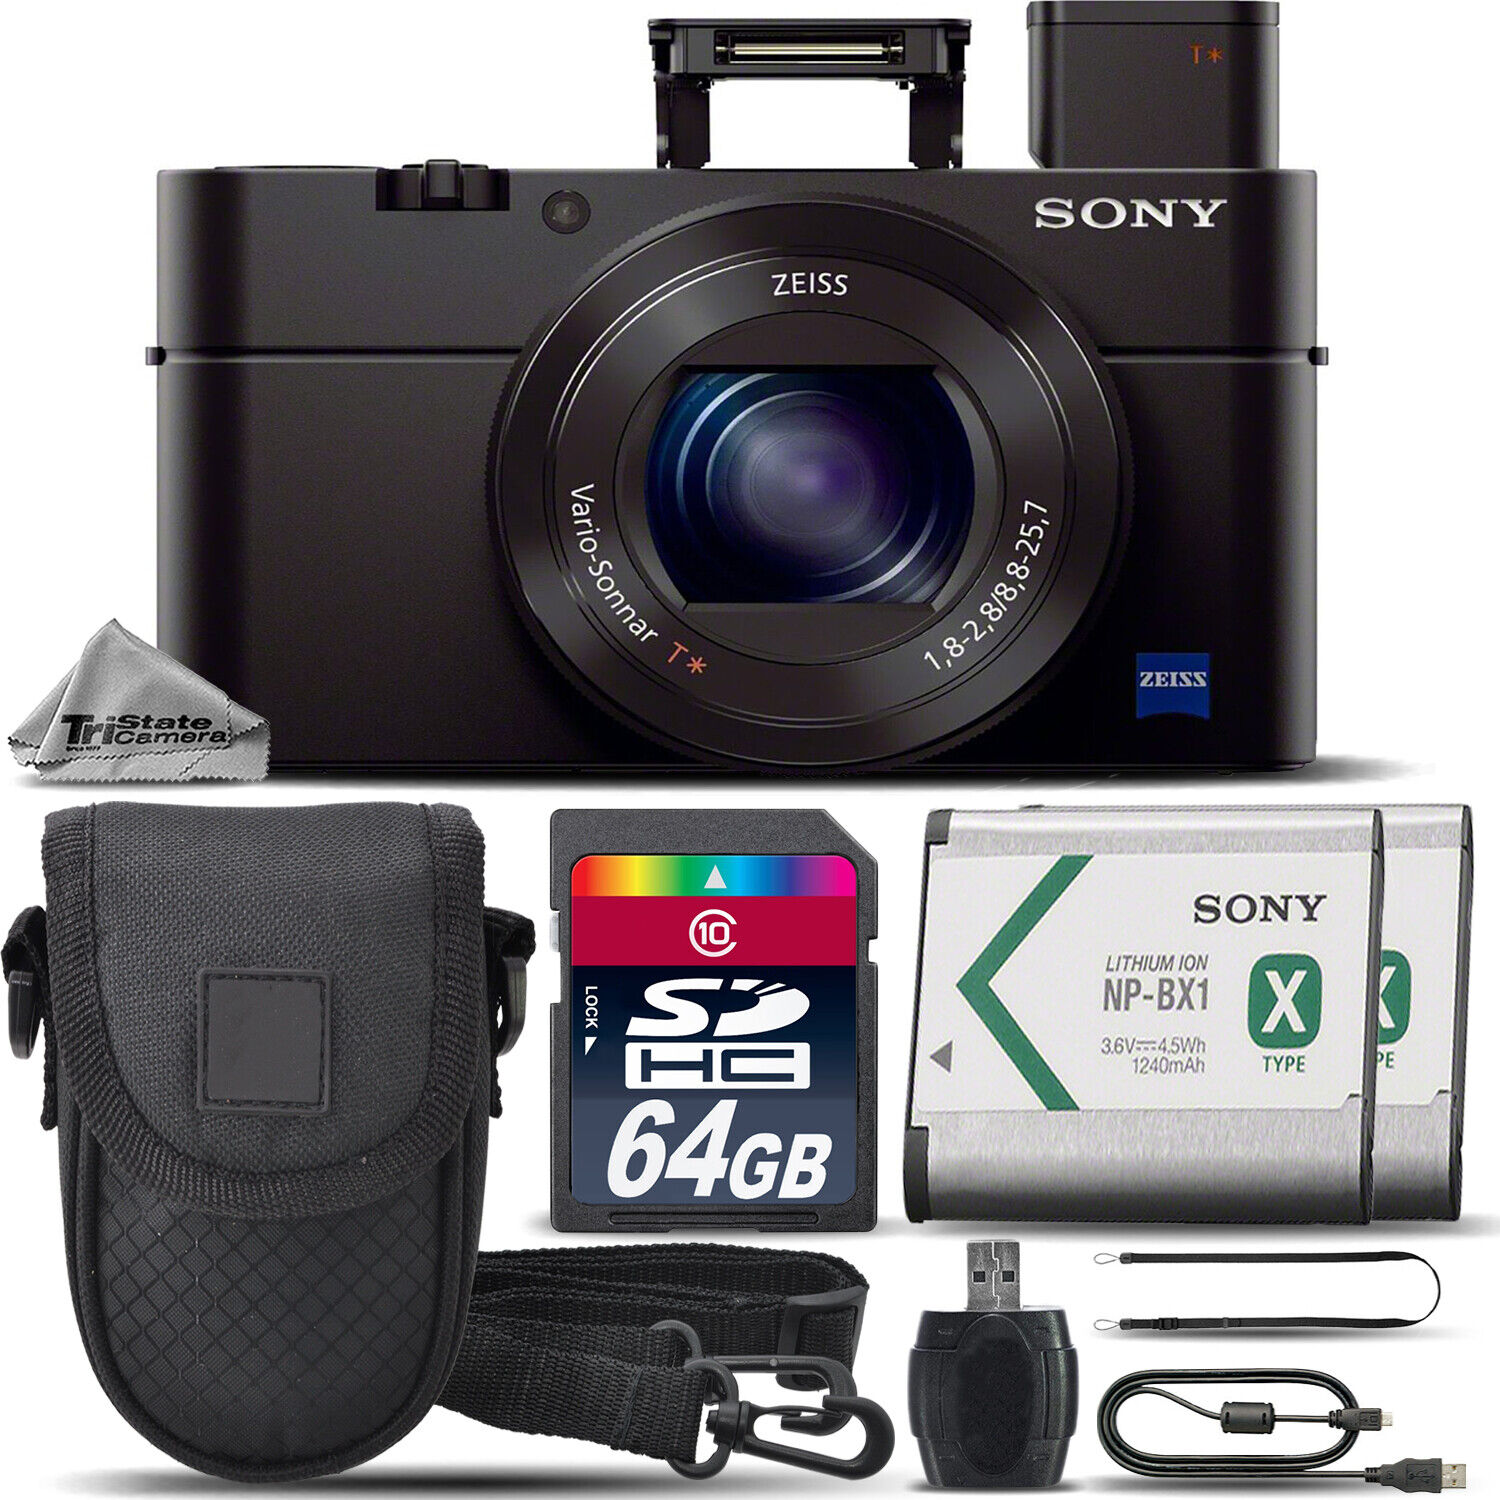 Sony Cyber-shot DSC-RX100 VII Digital Camera w/ WiFi & NFC + Case